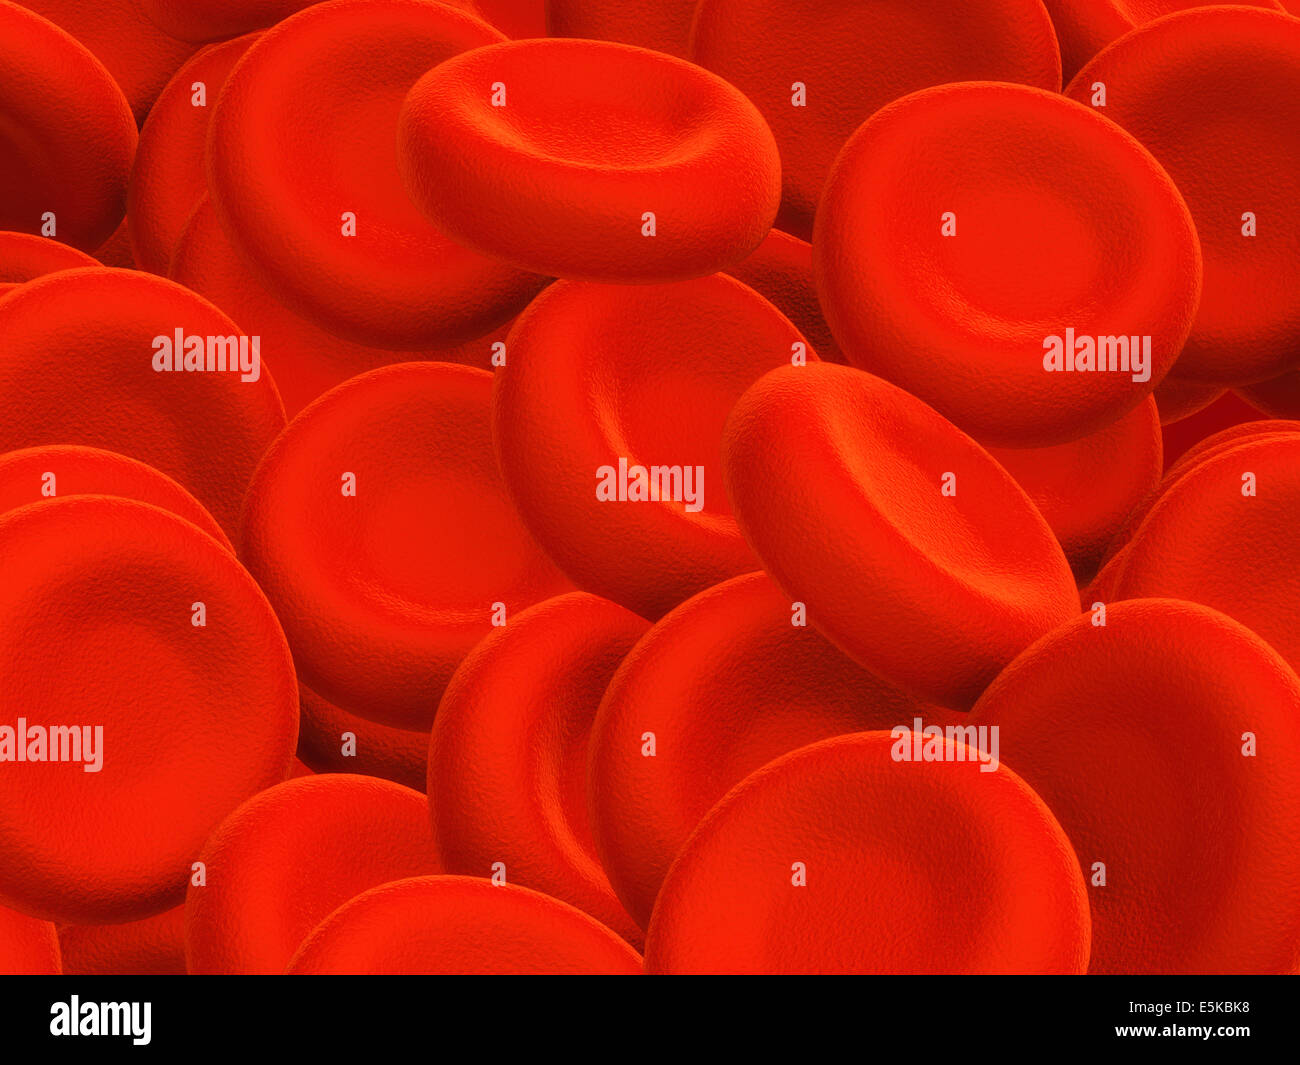 Illustration of human blood cells - 3d render Stock Photo